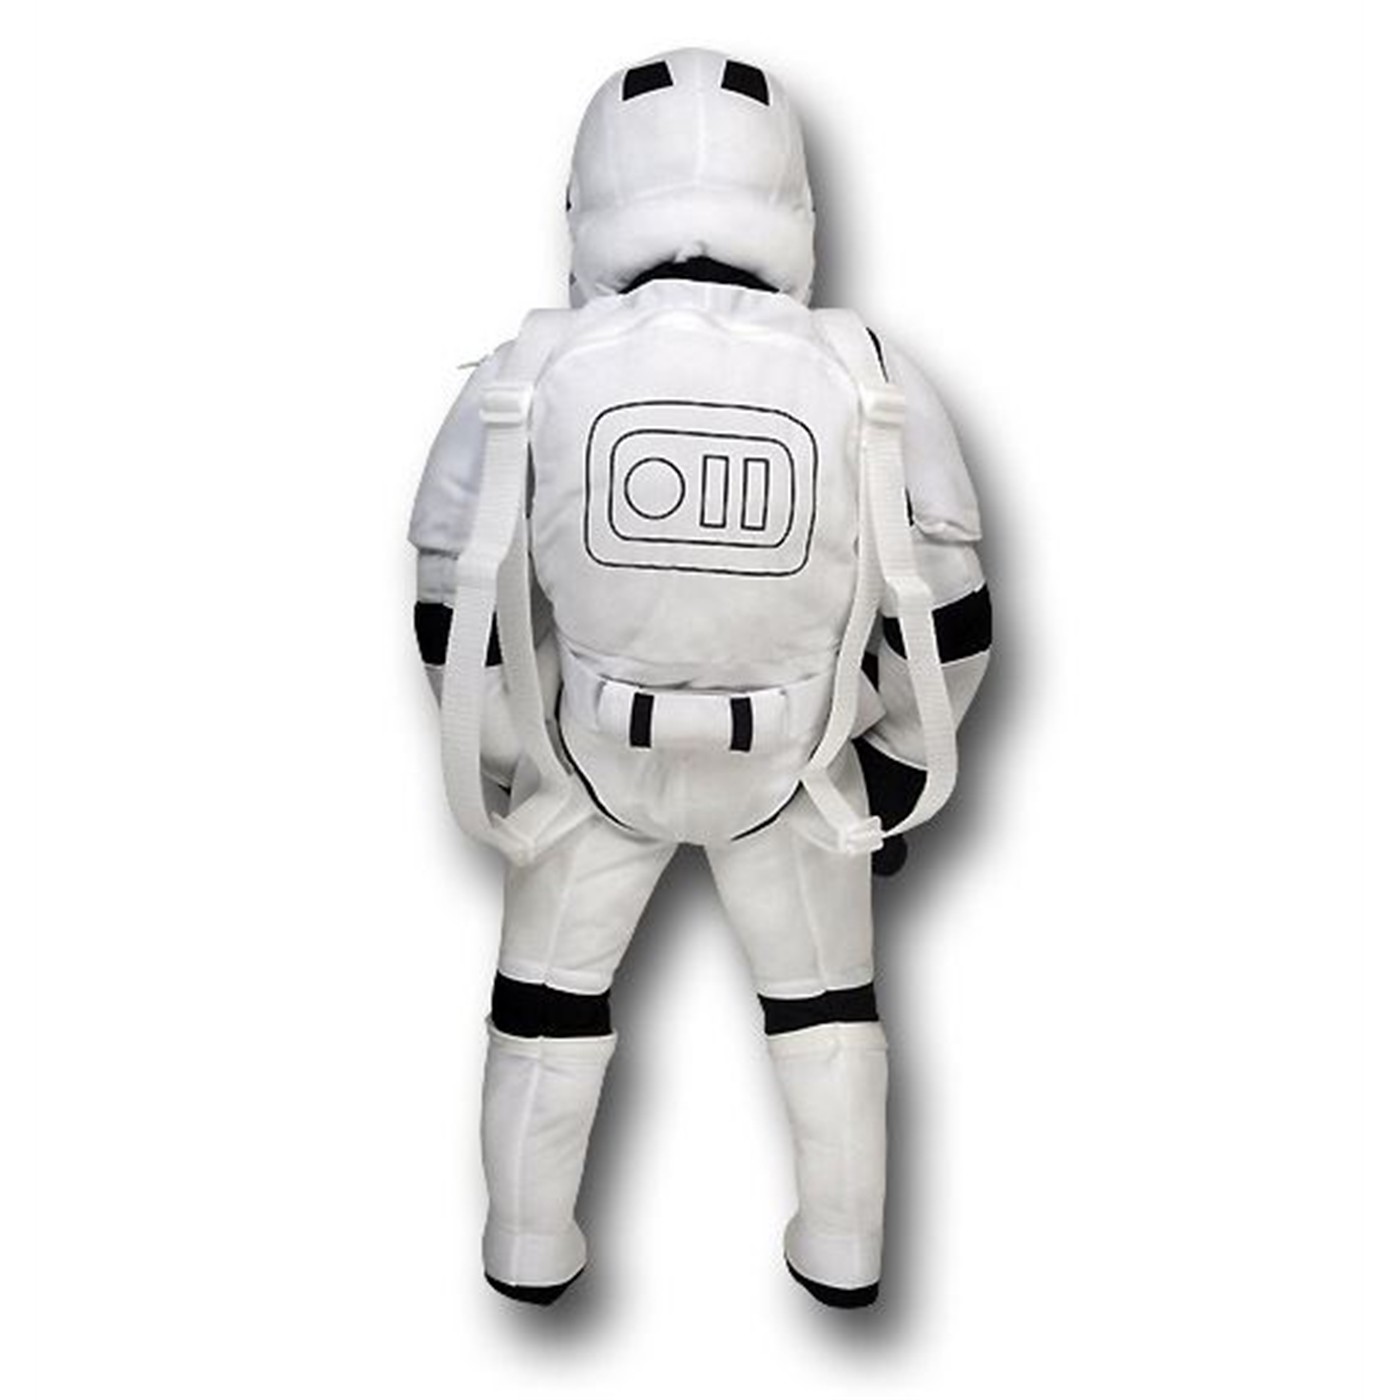 Star Wars Stormtrooper Backpack Buddy